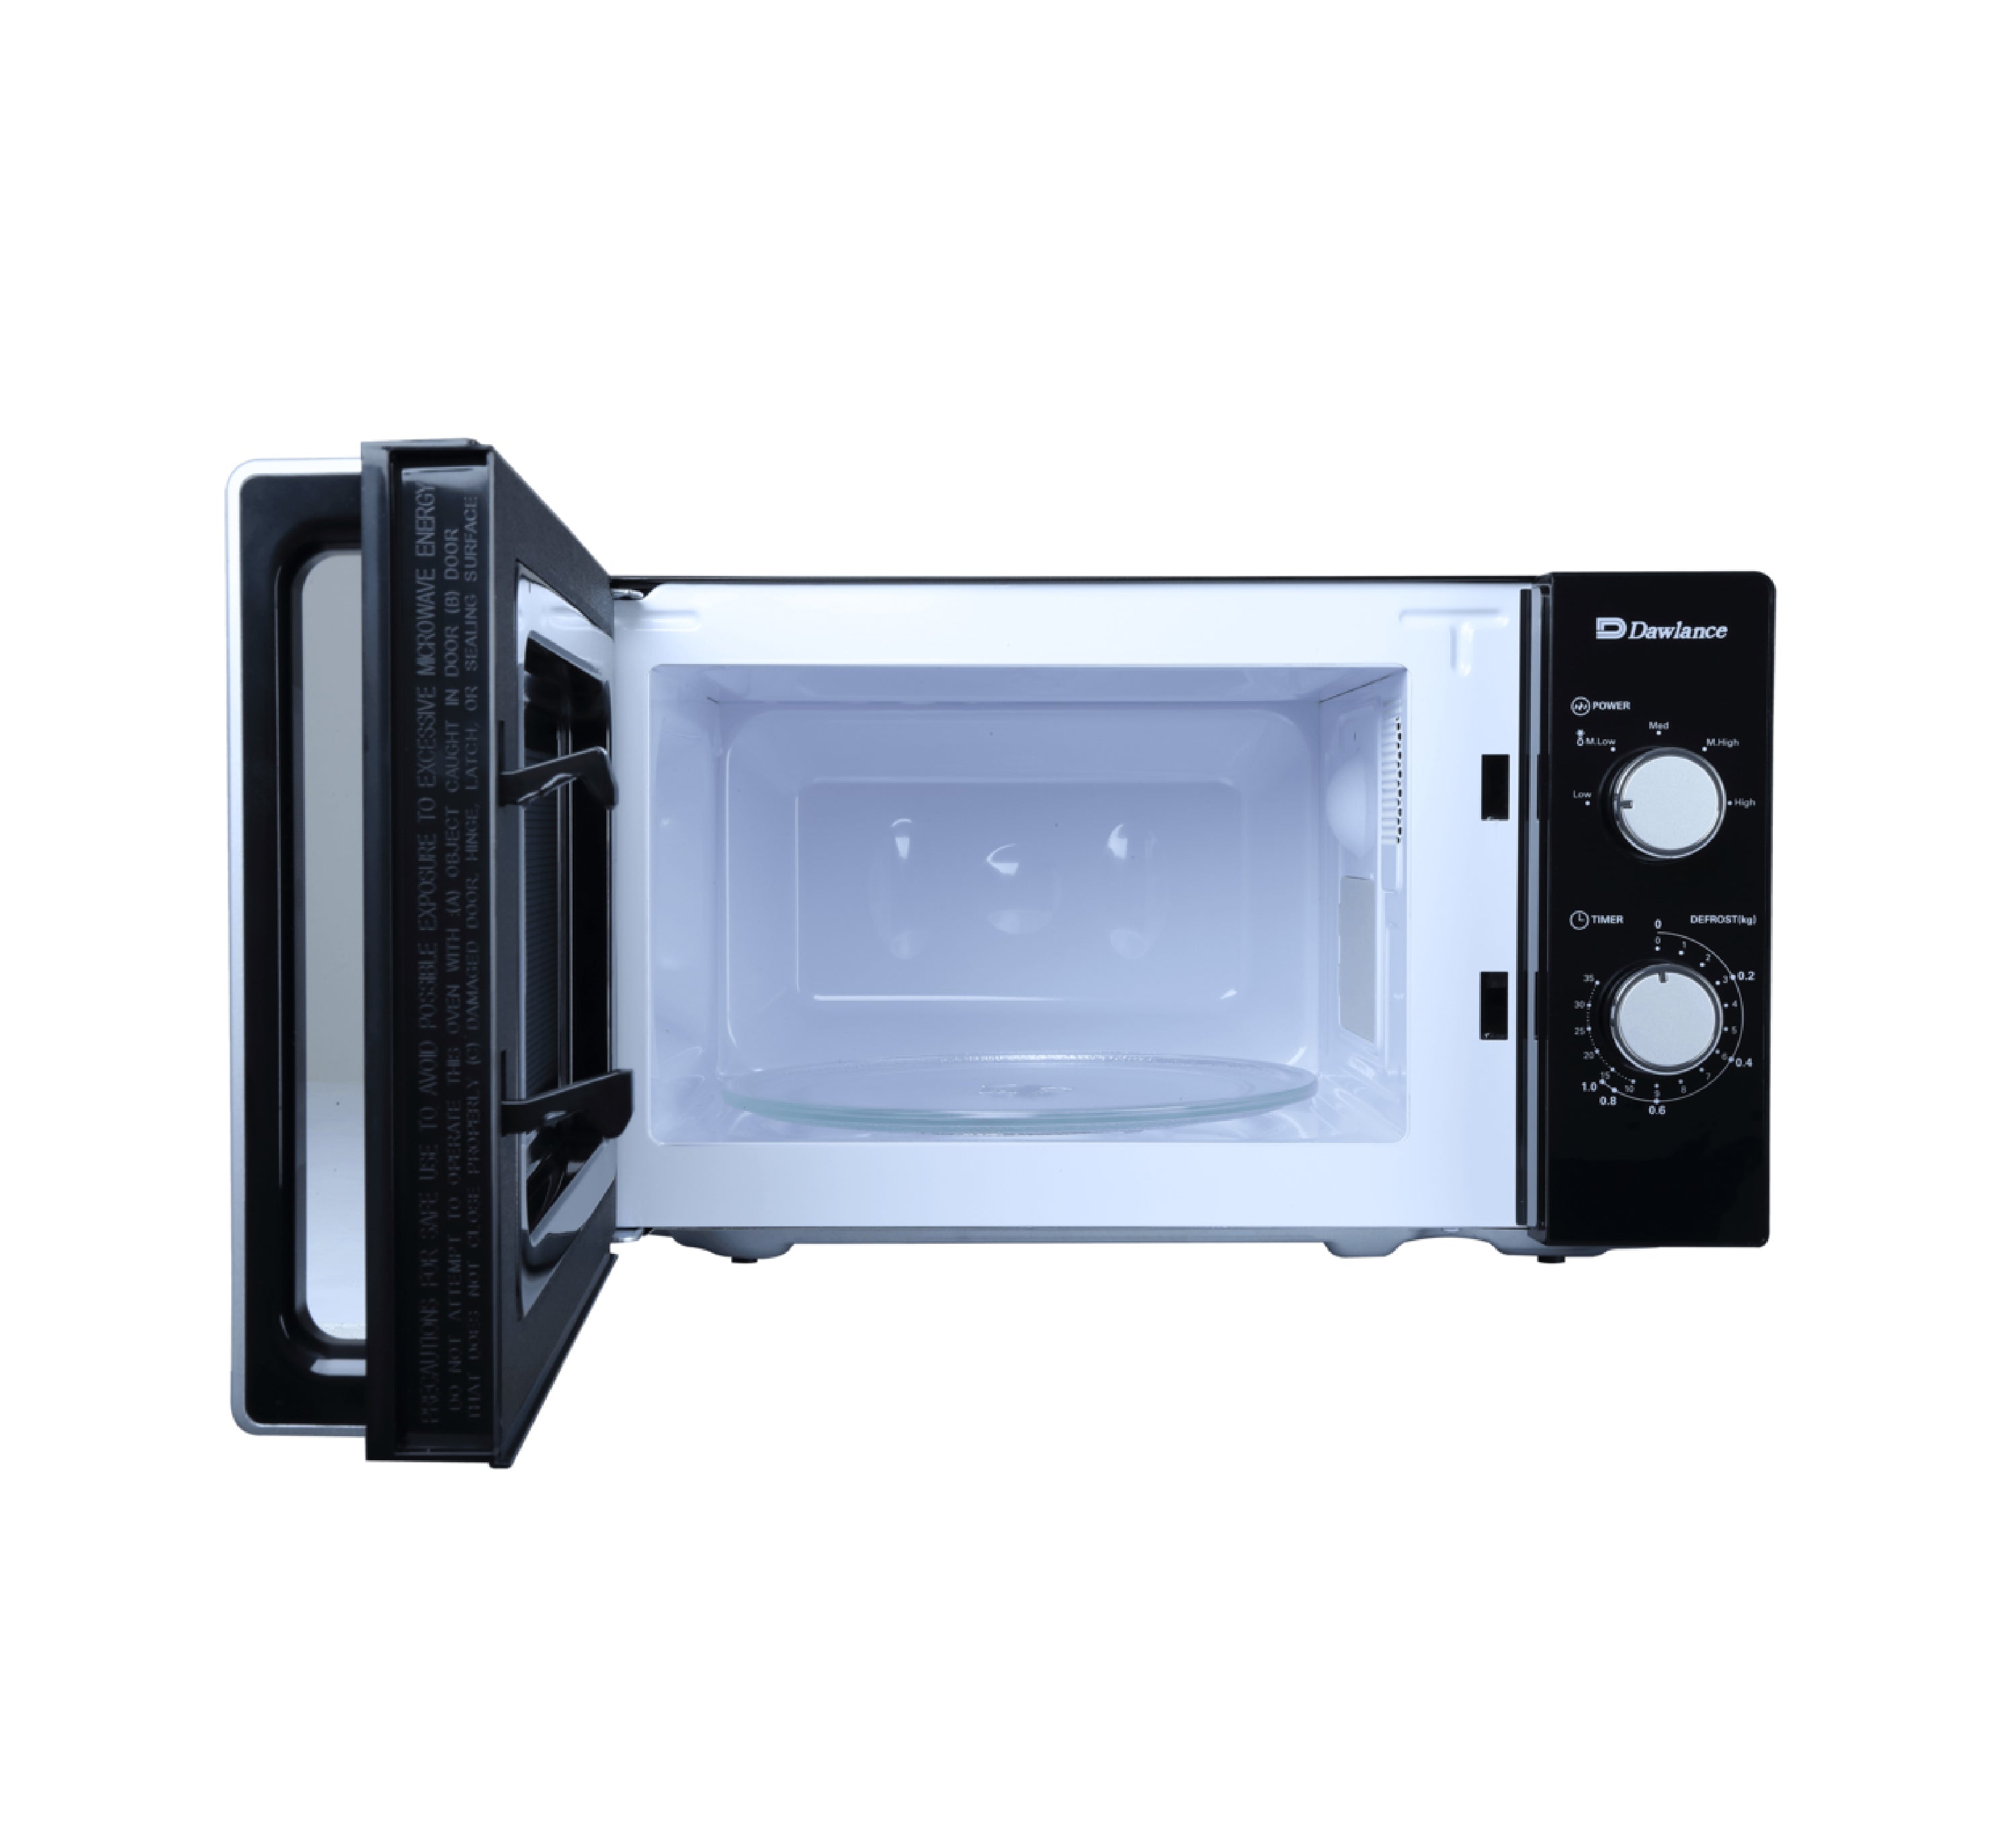 DAWLANCE MD-10 - Heating Microwave Oven